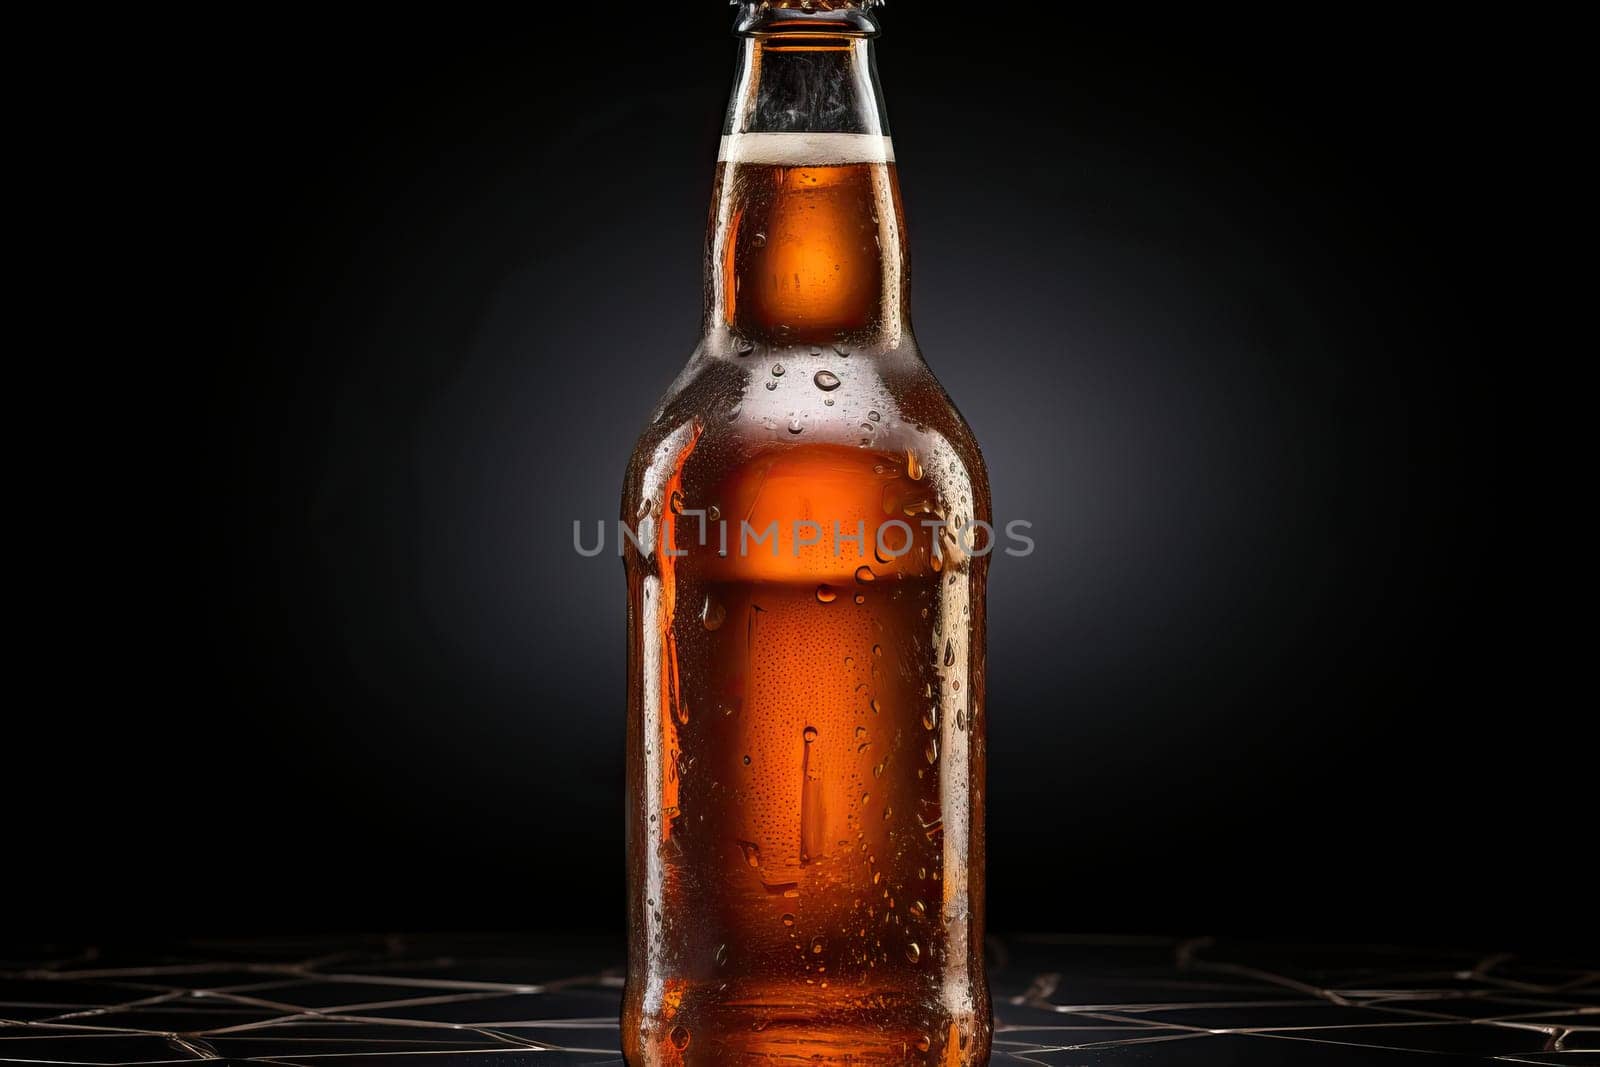 Glass brown bottle with water drops for beer, beer maker mockup on black background.